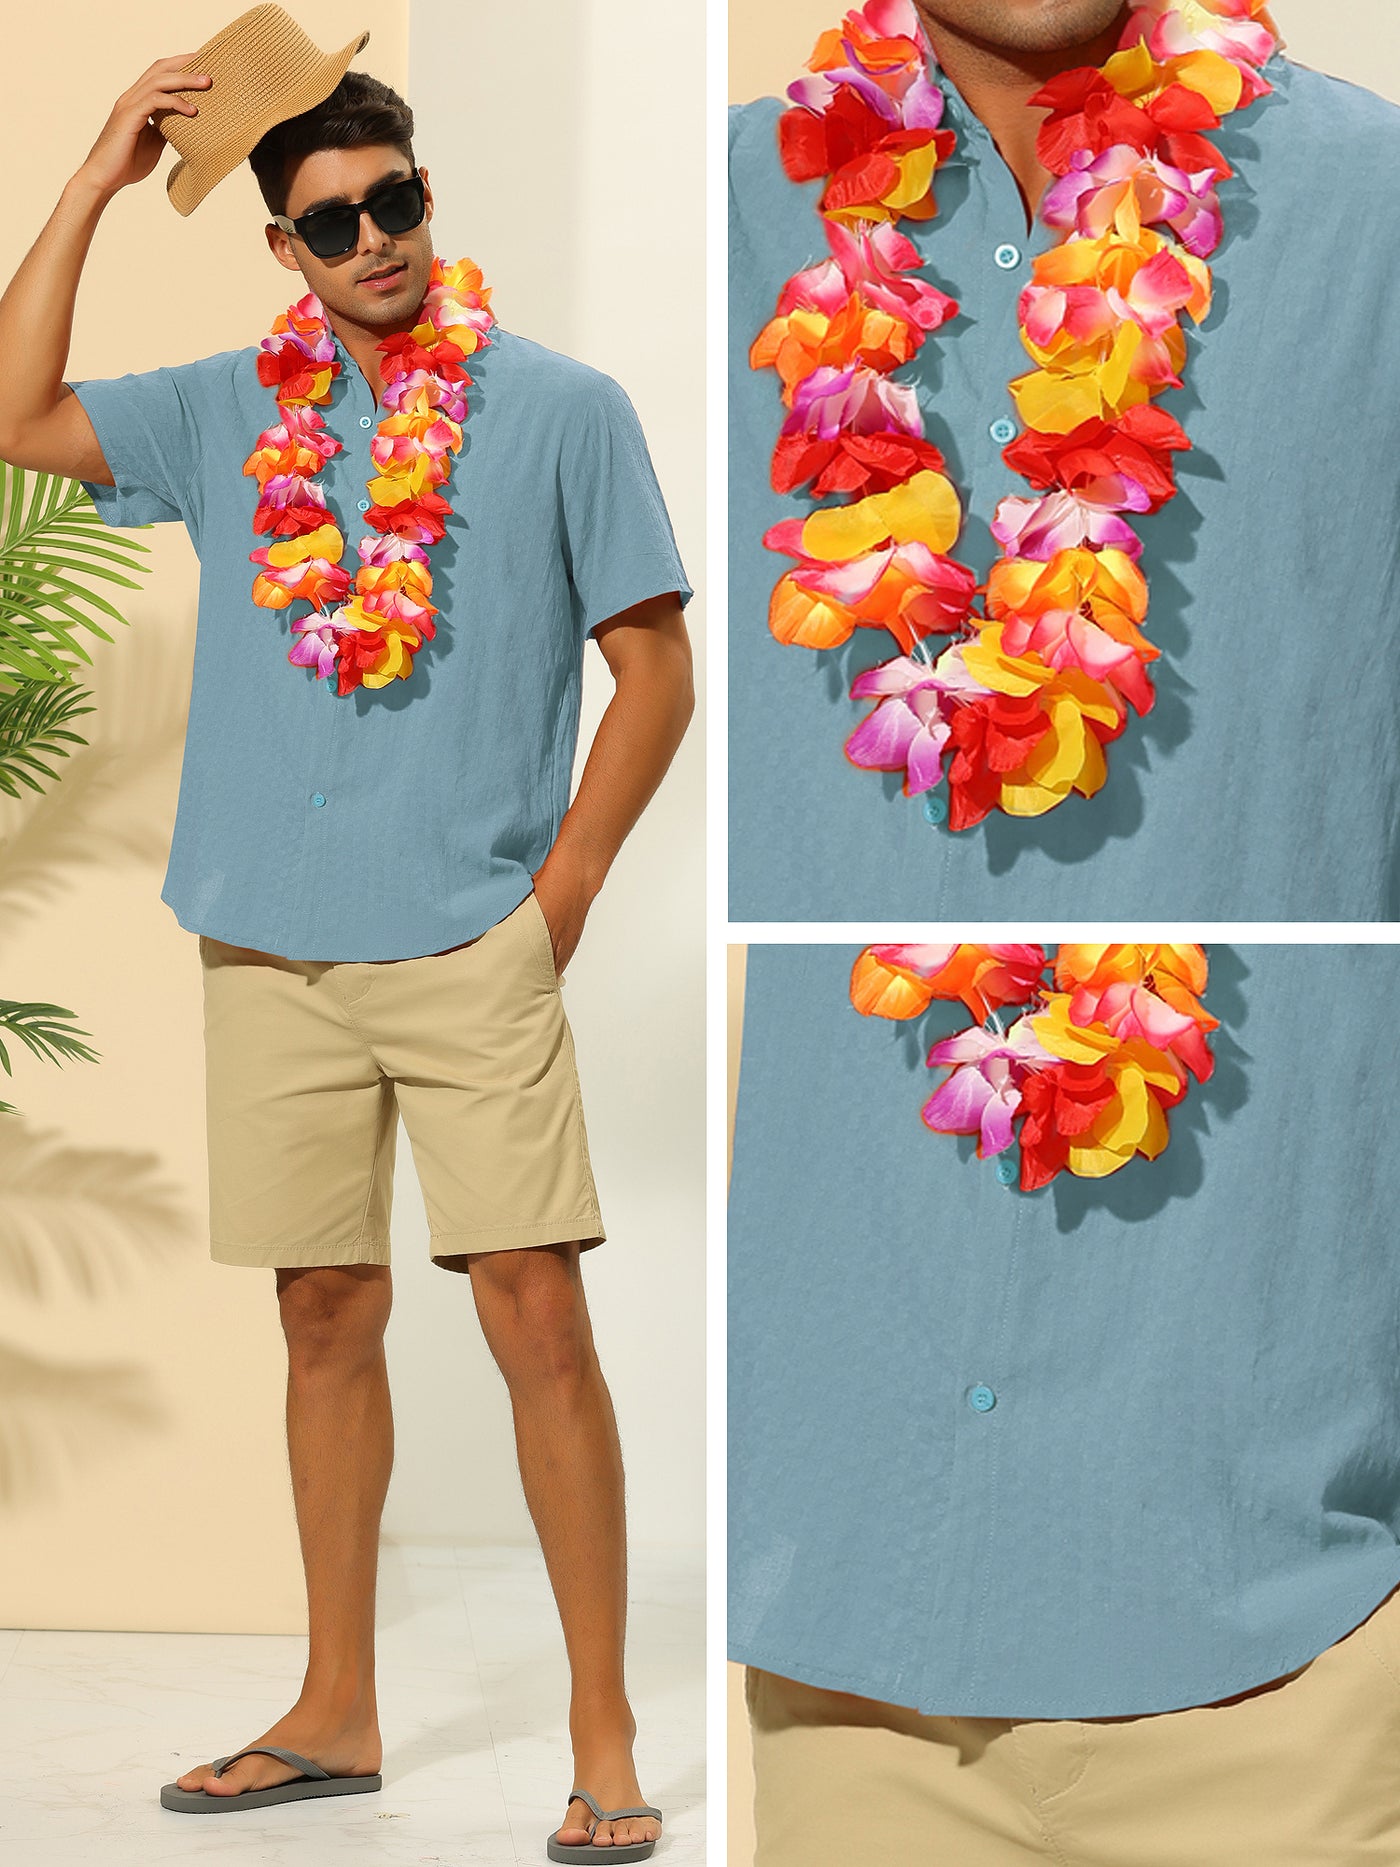 Bublédon Summer Shirts for Men's Solid Color Short Sleeve Point Collar Beach Hawaiian Shirt